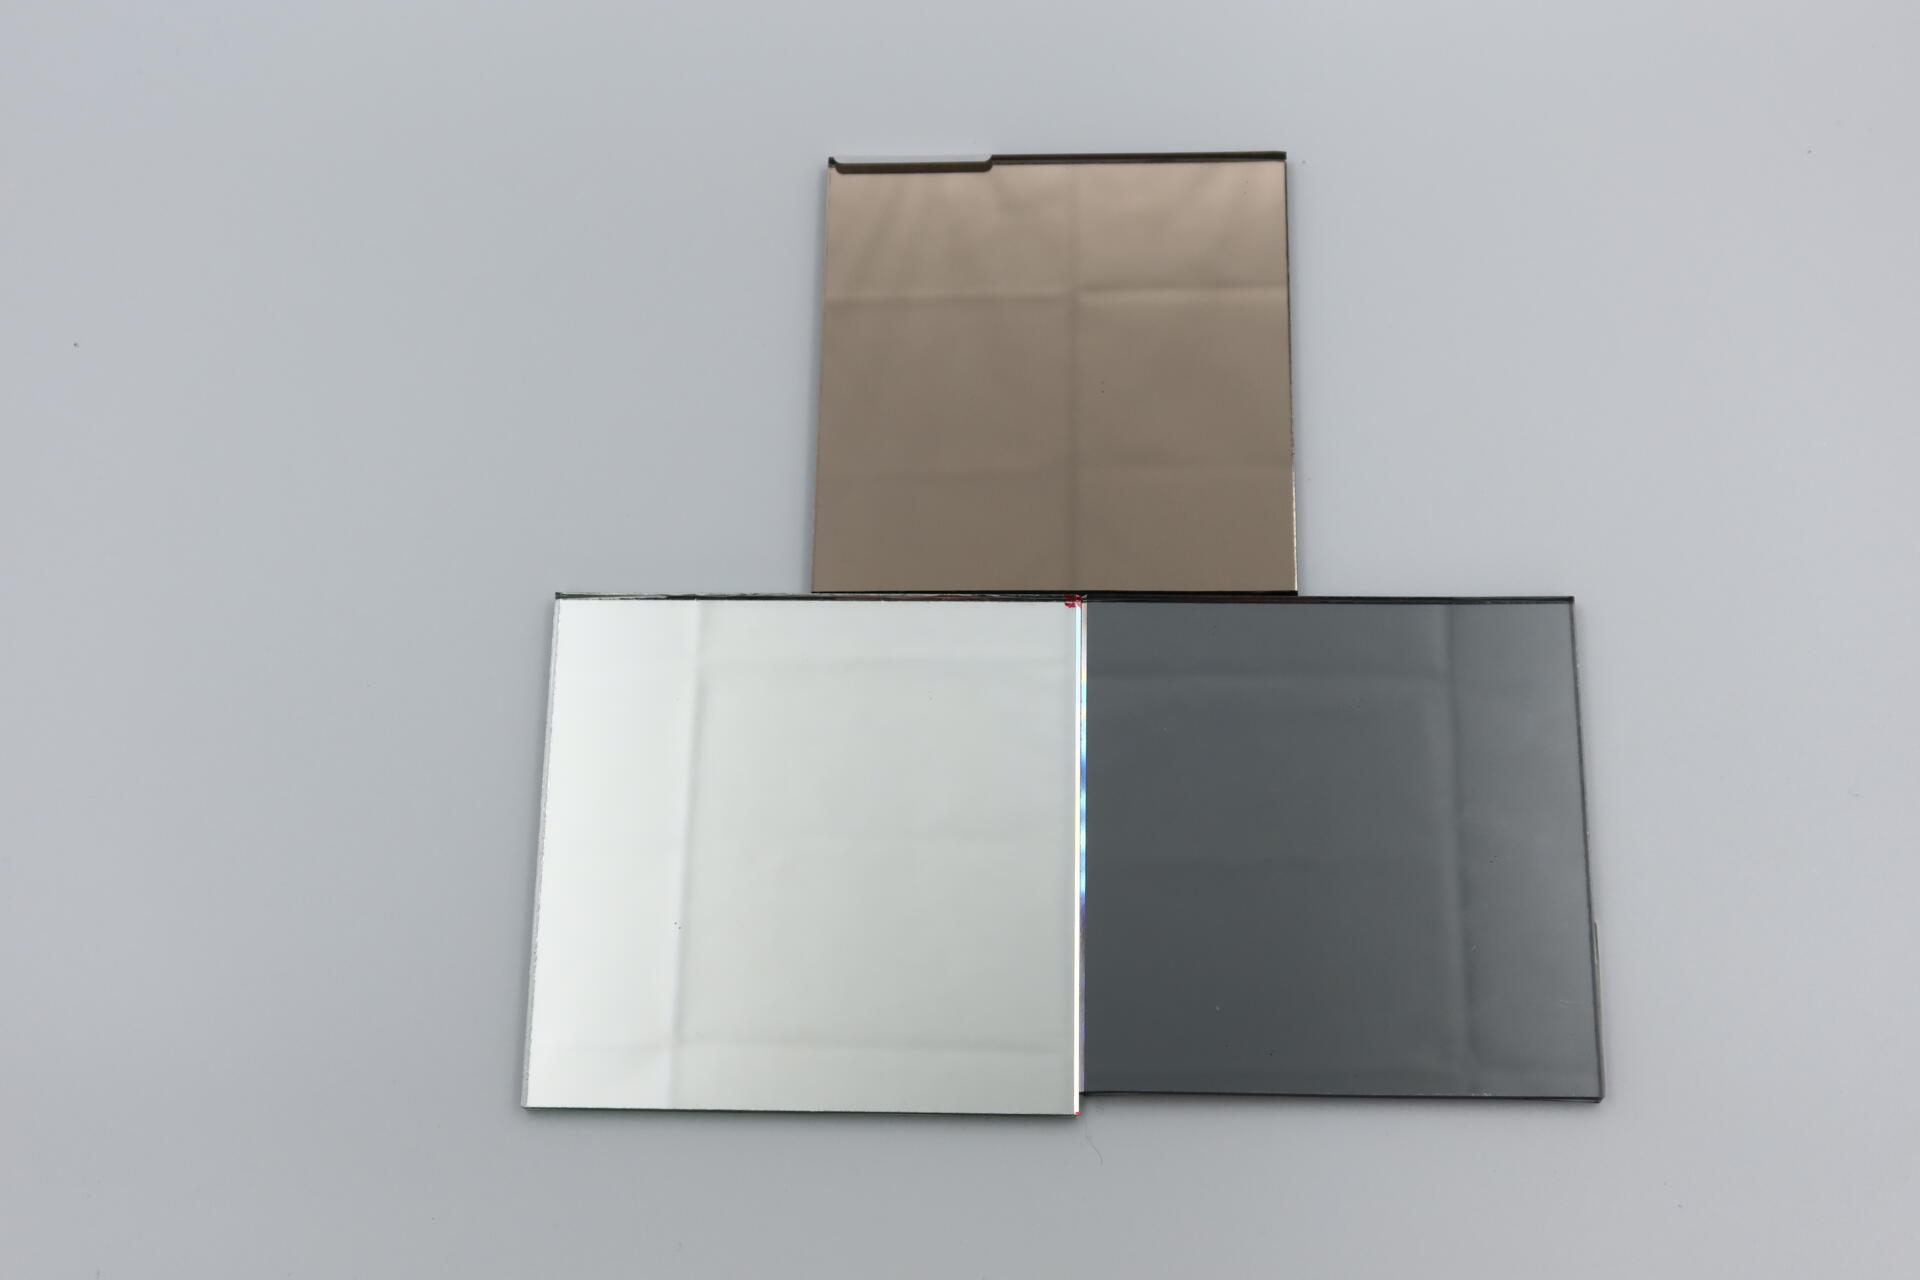 Samples Gekleurde Spiegels - allemaal driehoek